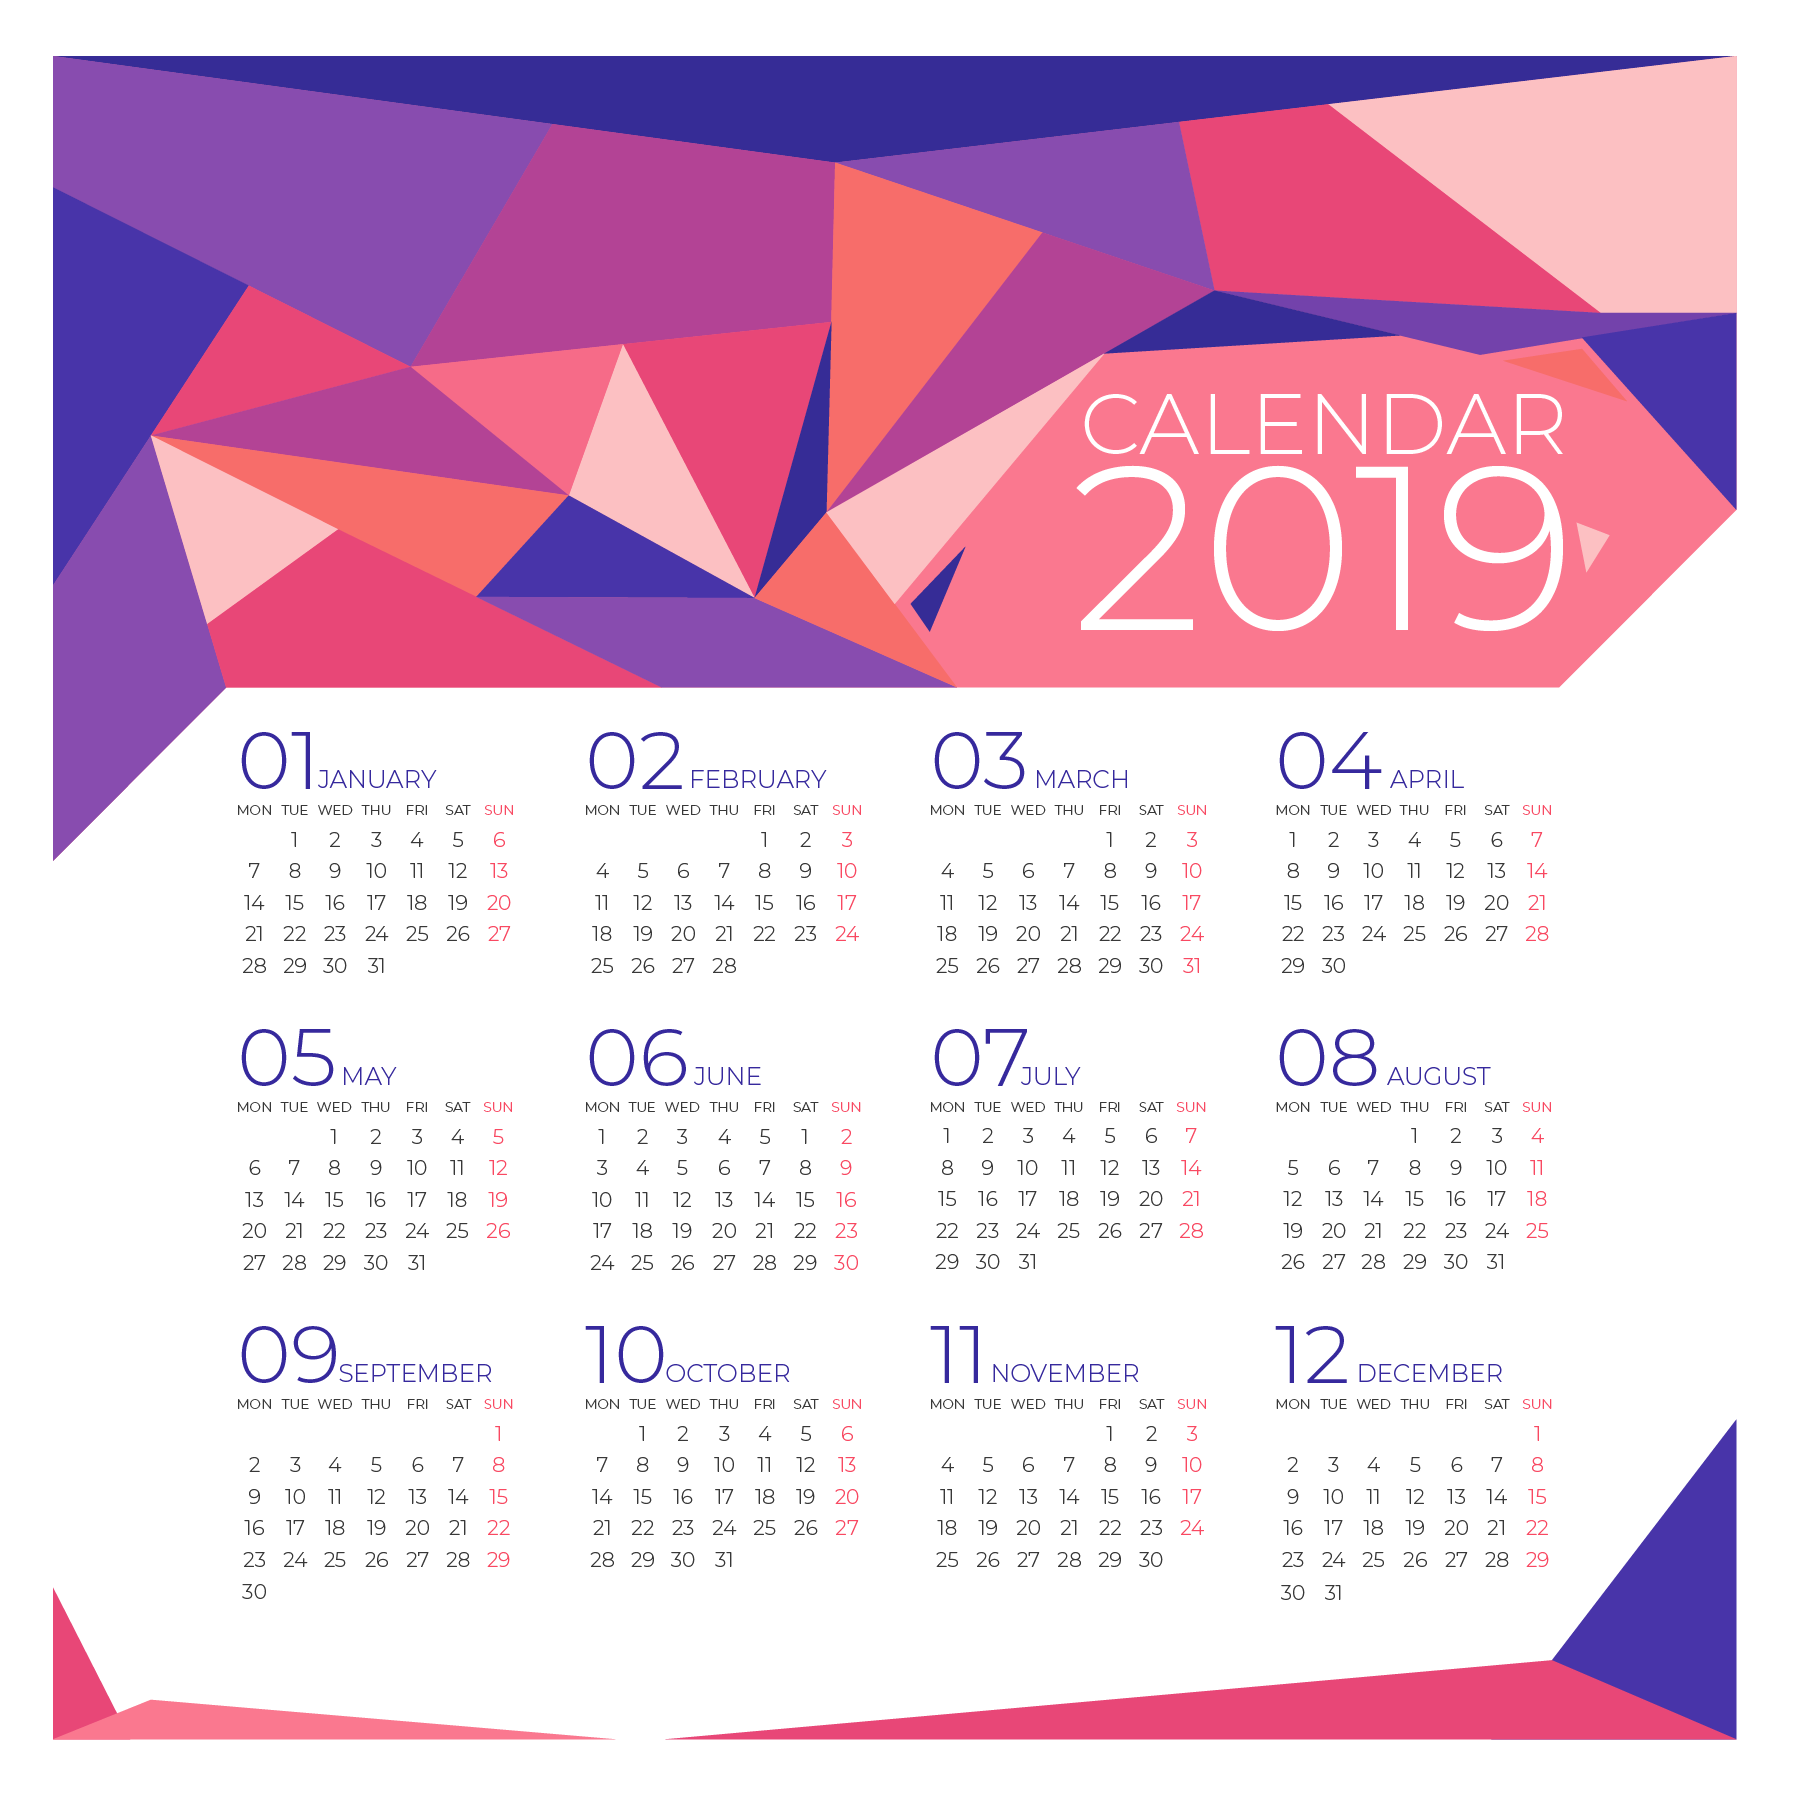 Calendar 2019 PNG Royalty-Free Photo